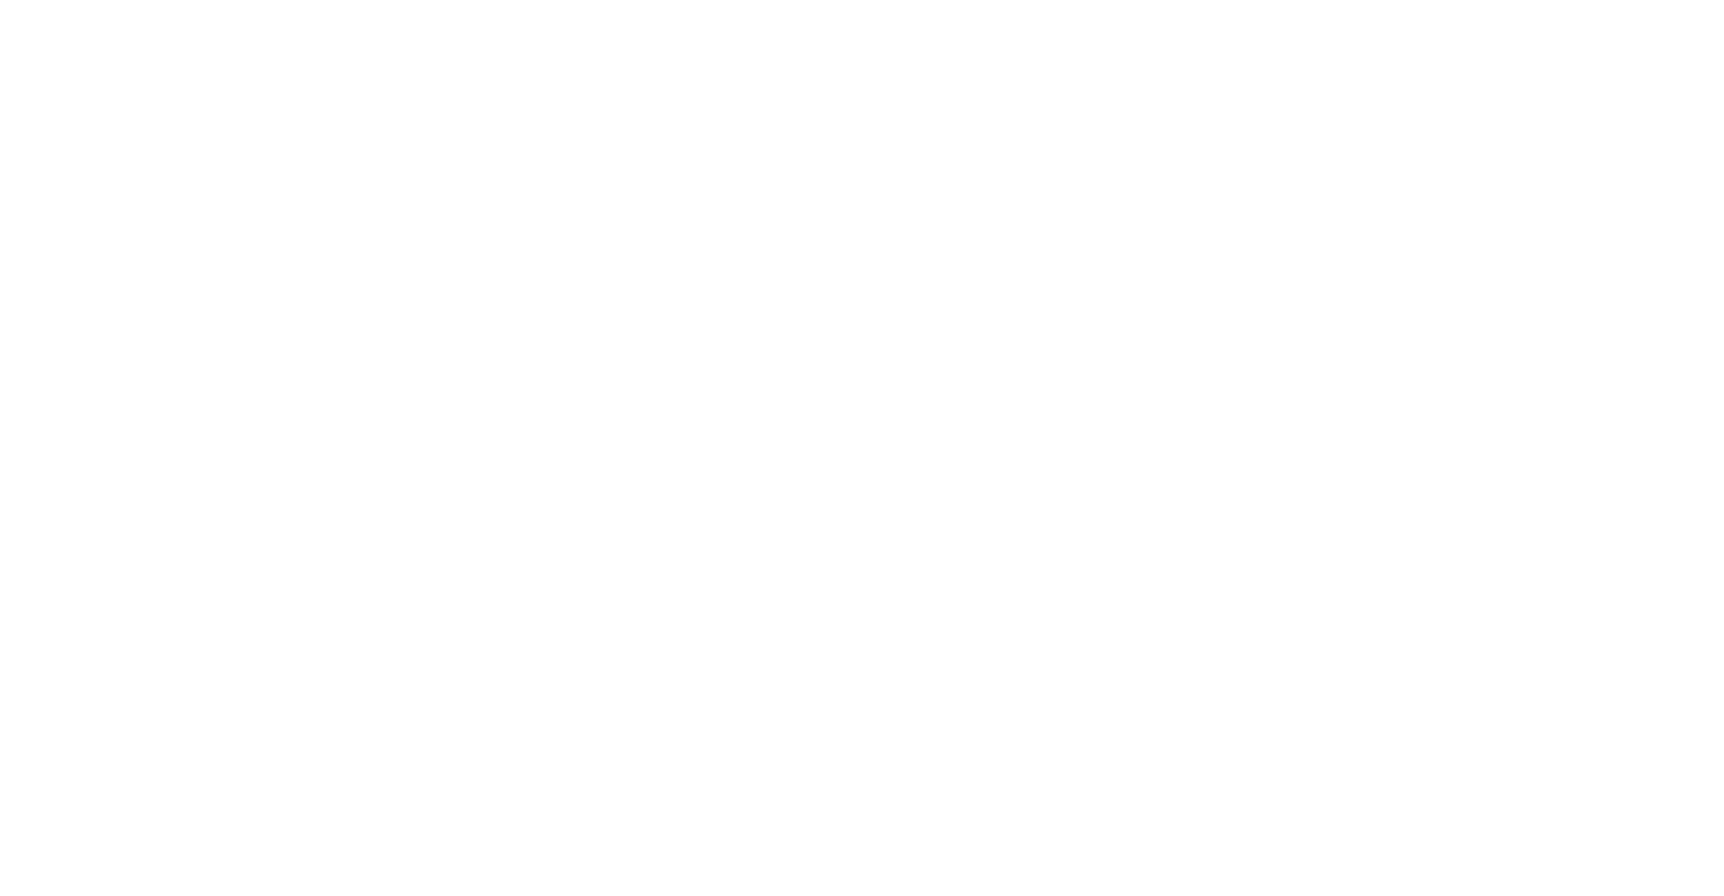 Global Pet Expo 2023 logo